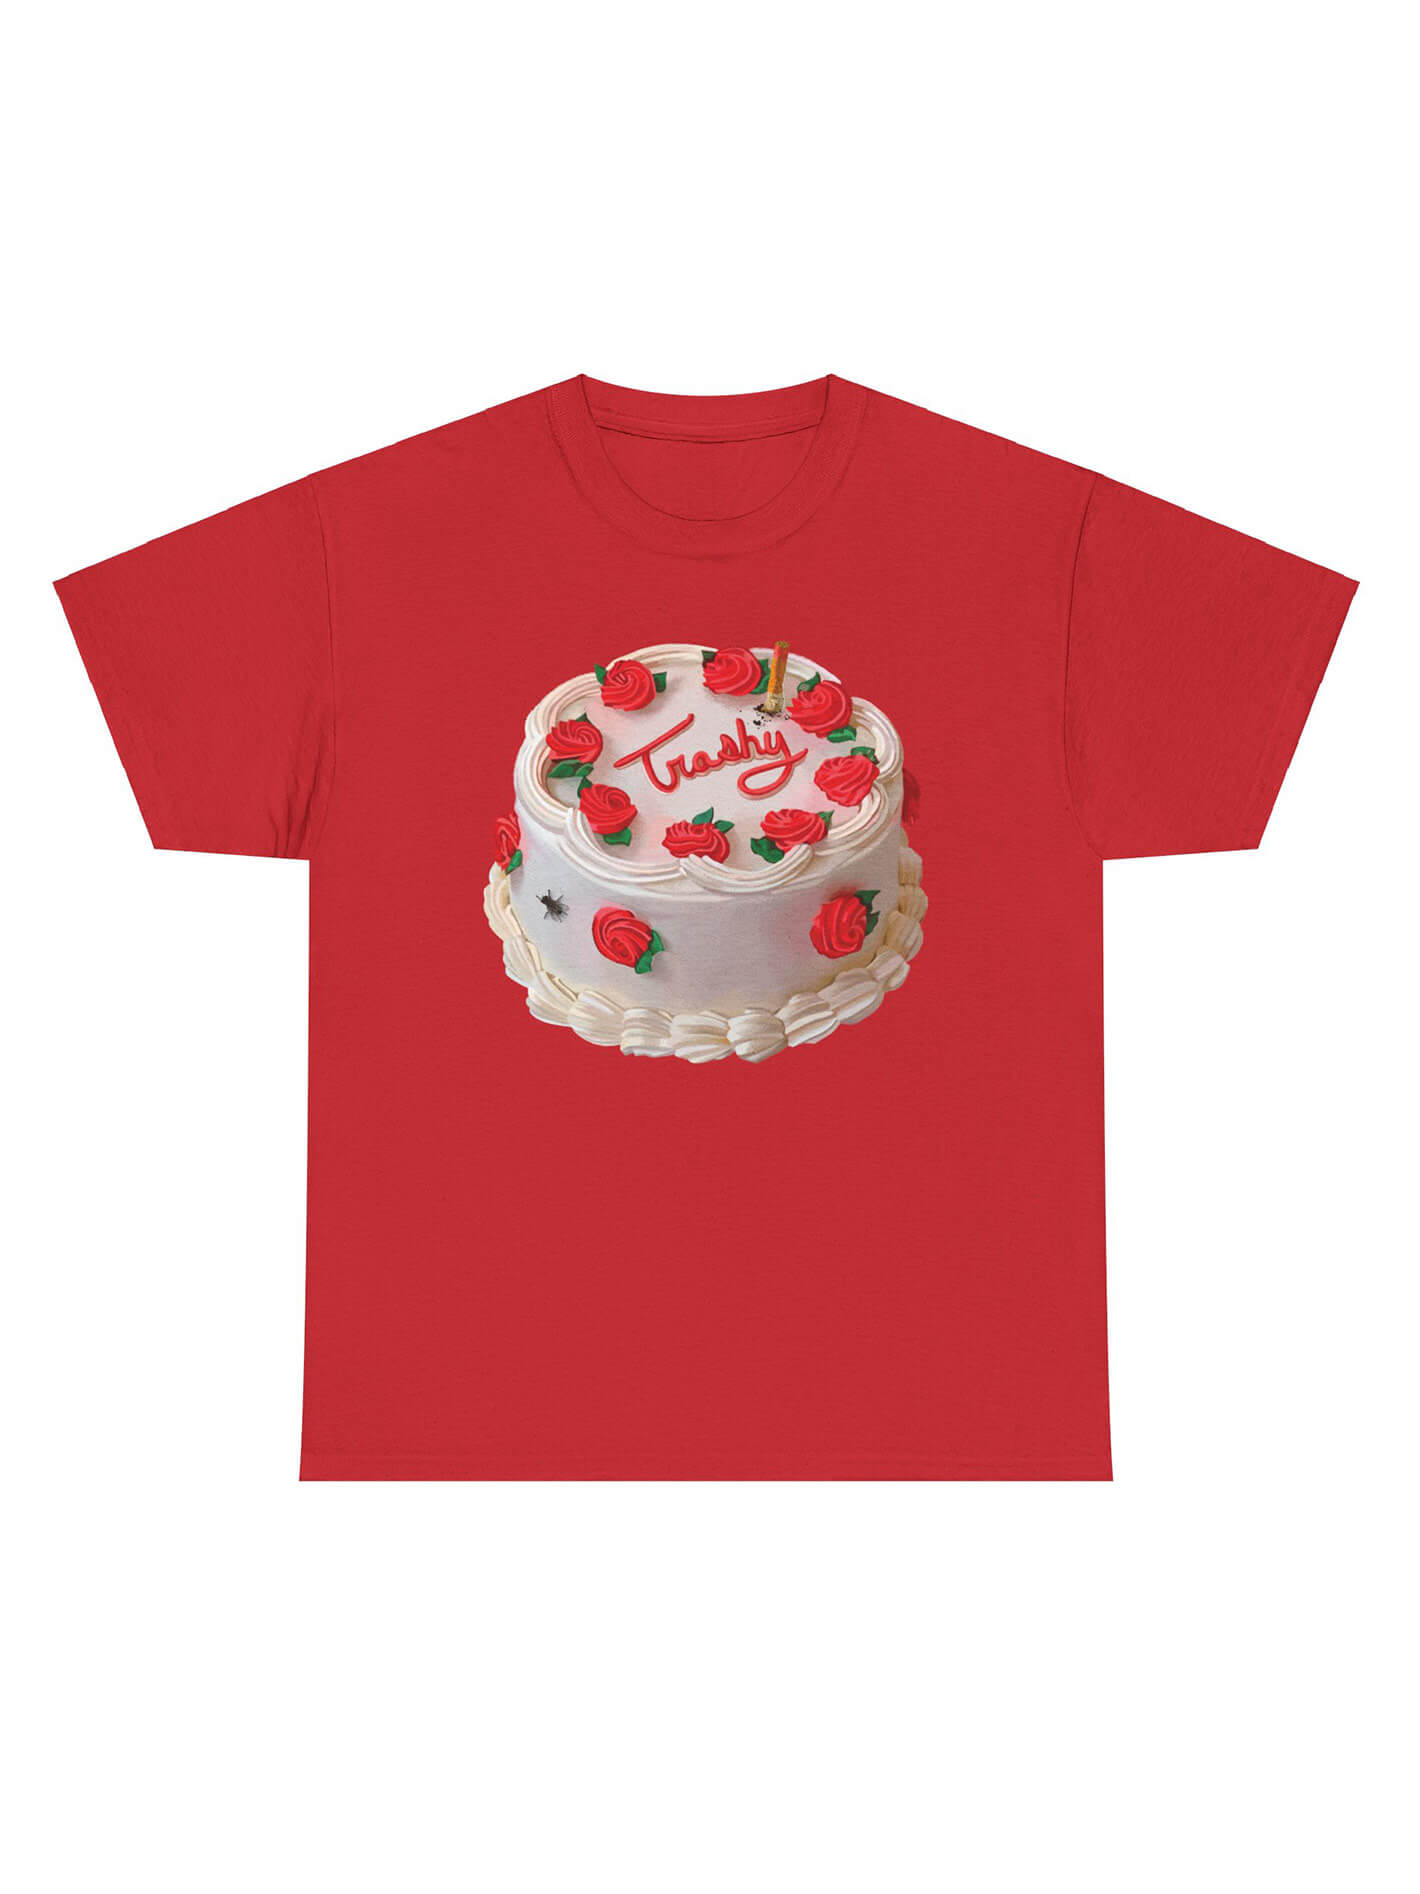 Vintage John Waters cake Trashy t-shirt.